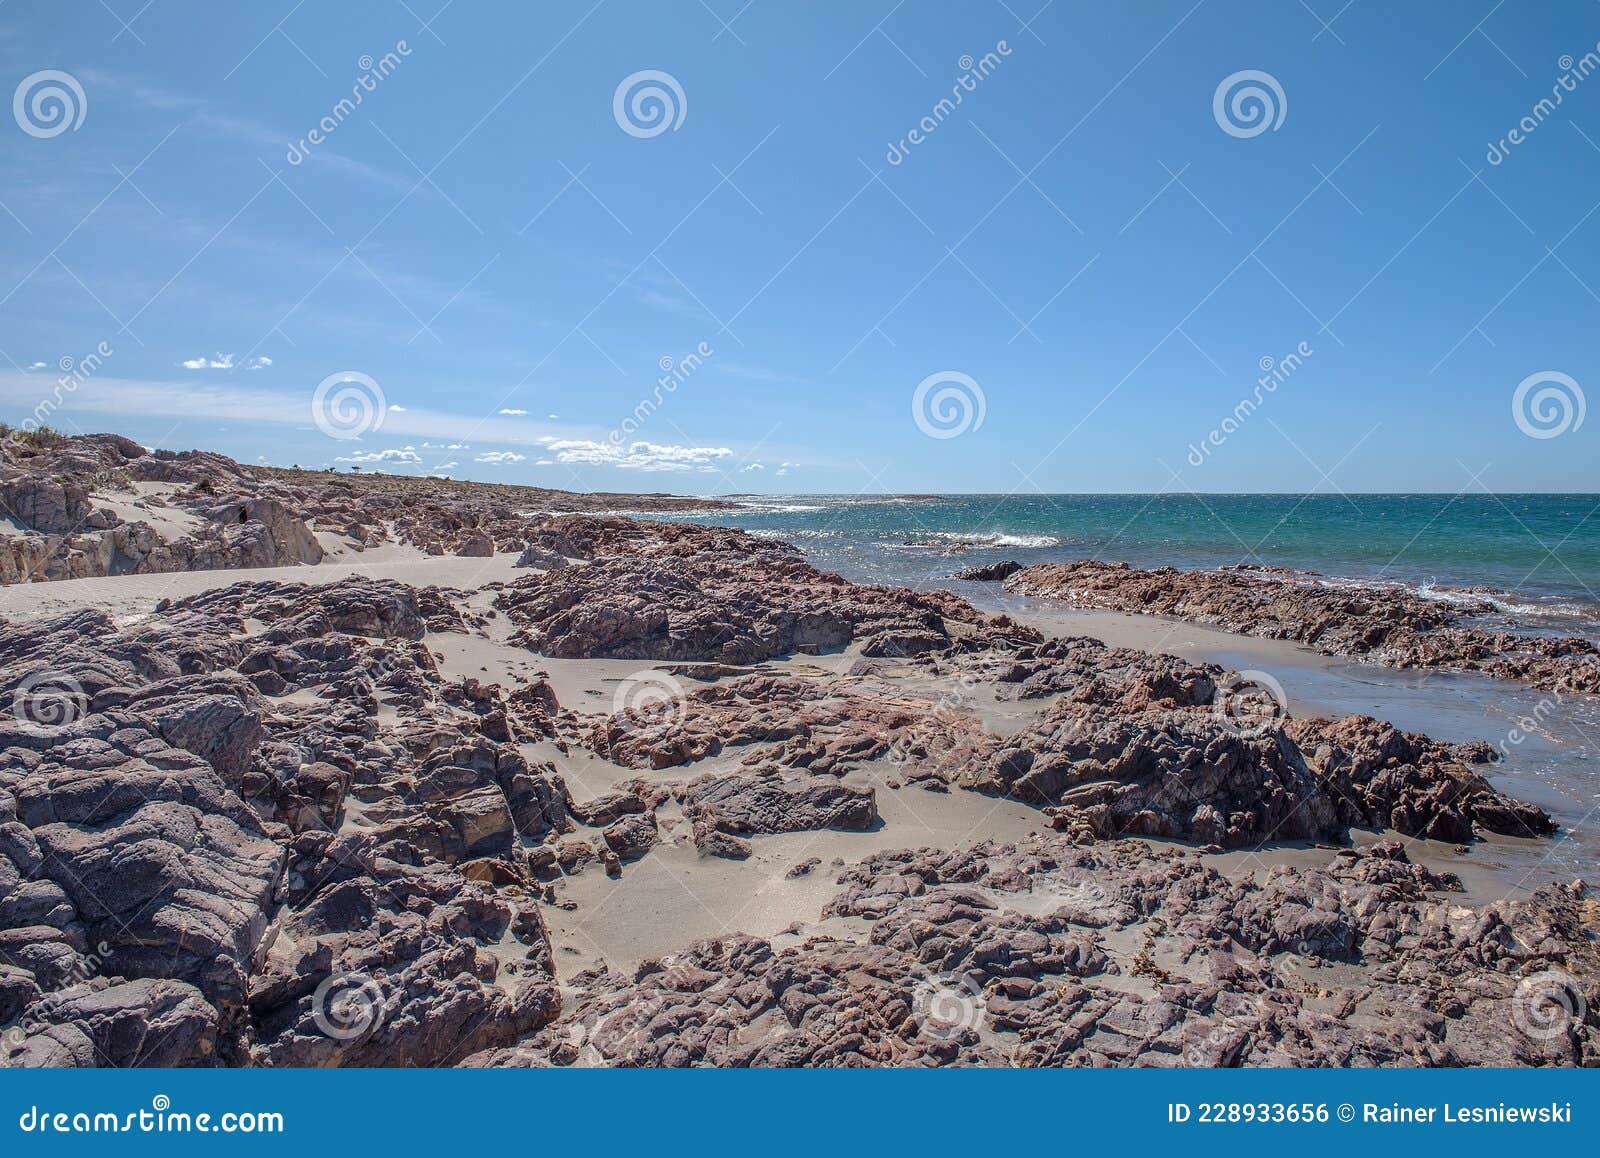 argentinian atlantic coast north of comodoro rivadavia